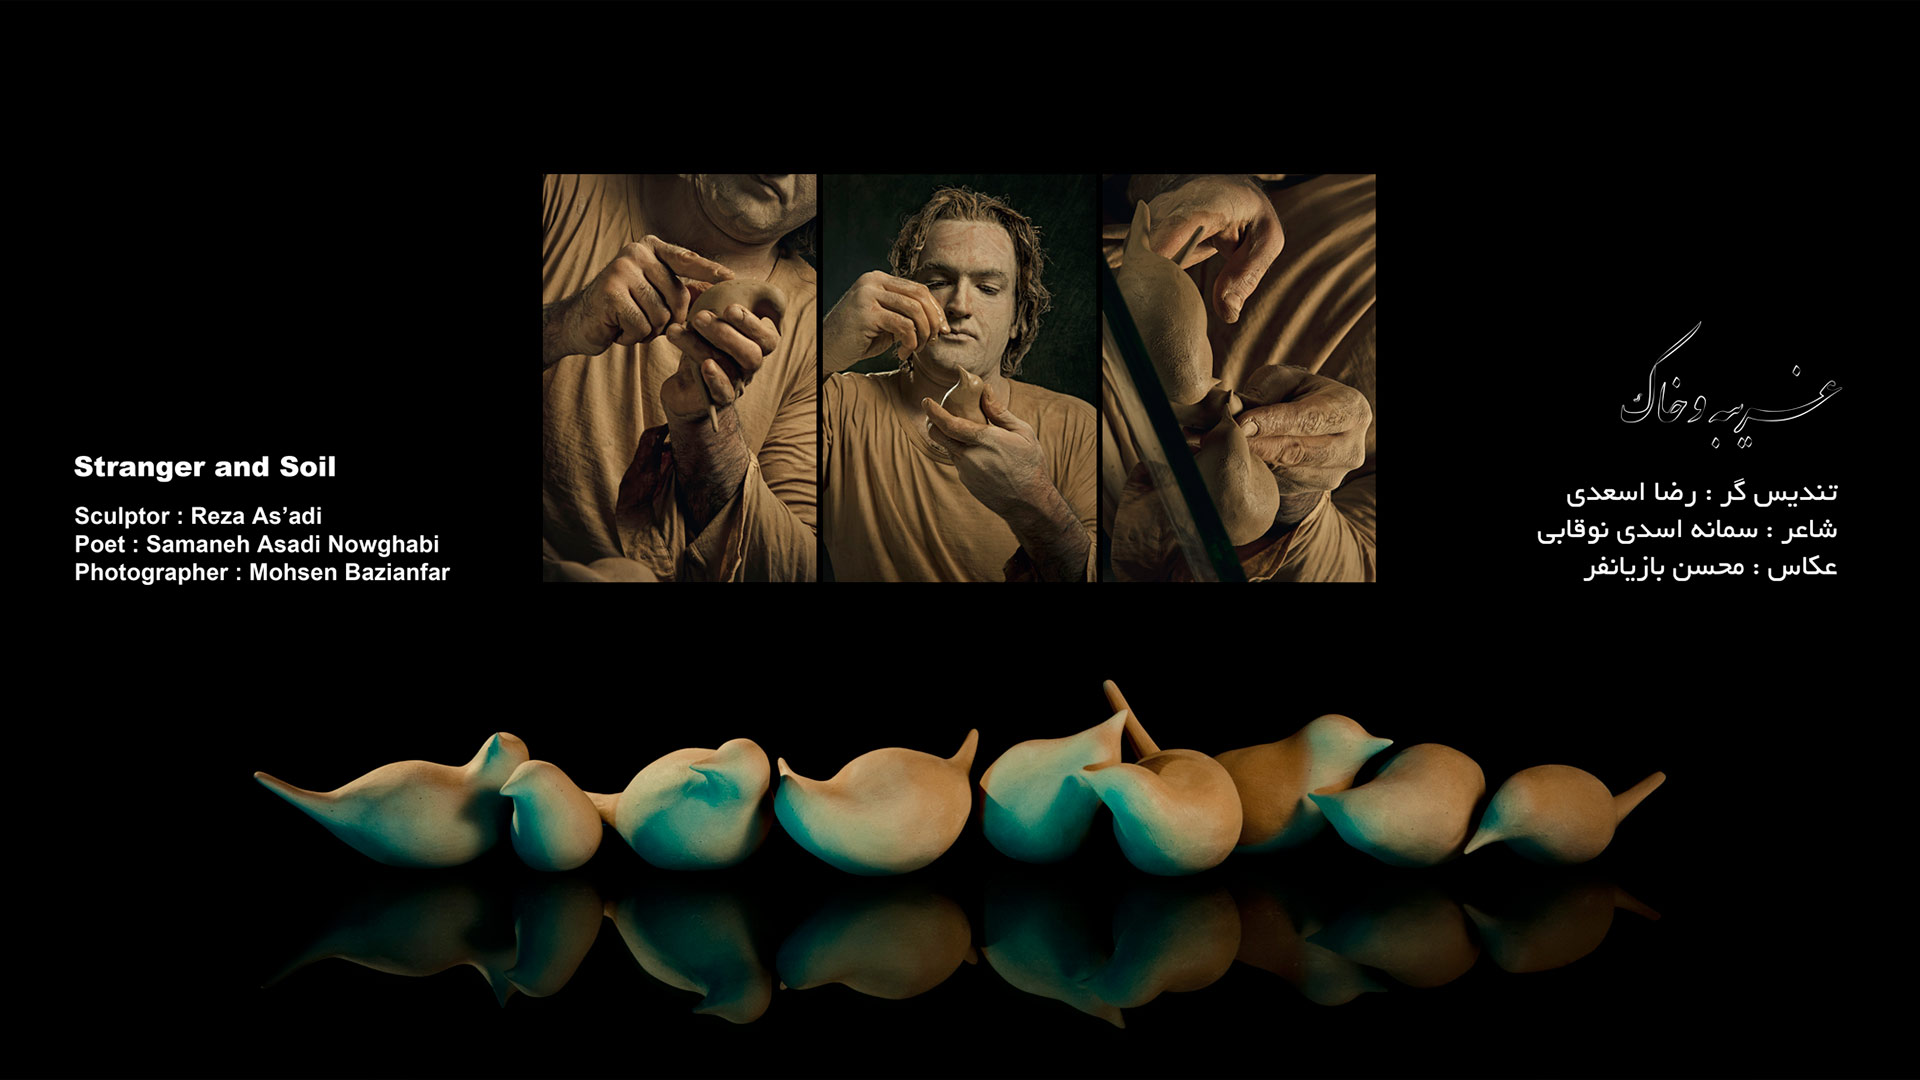 Stranger and soil performance poster - Sculptor: Reza Asaadi - Poet: Samaneh Asadi Nougabi - Photographer: Mohsen Bazianfar